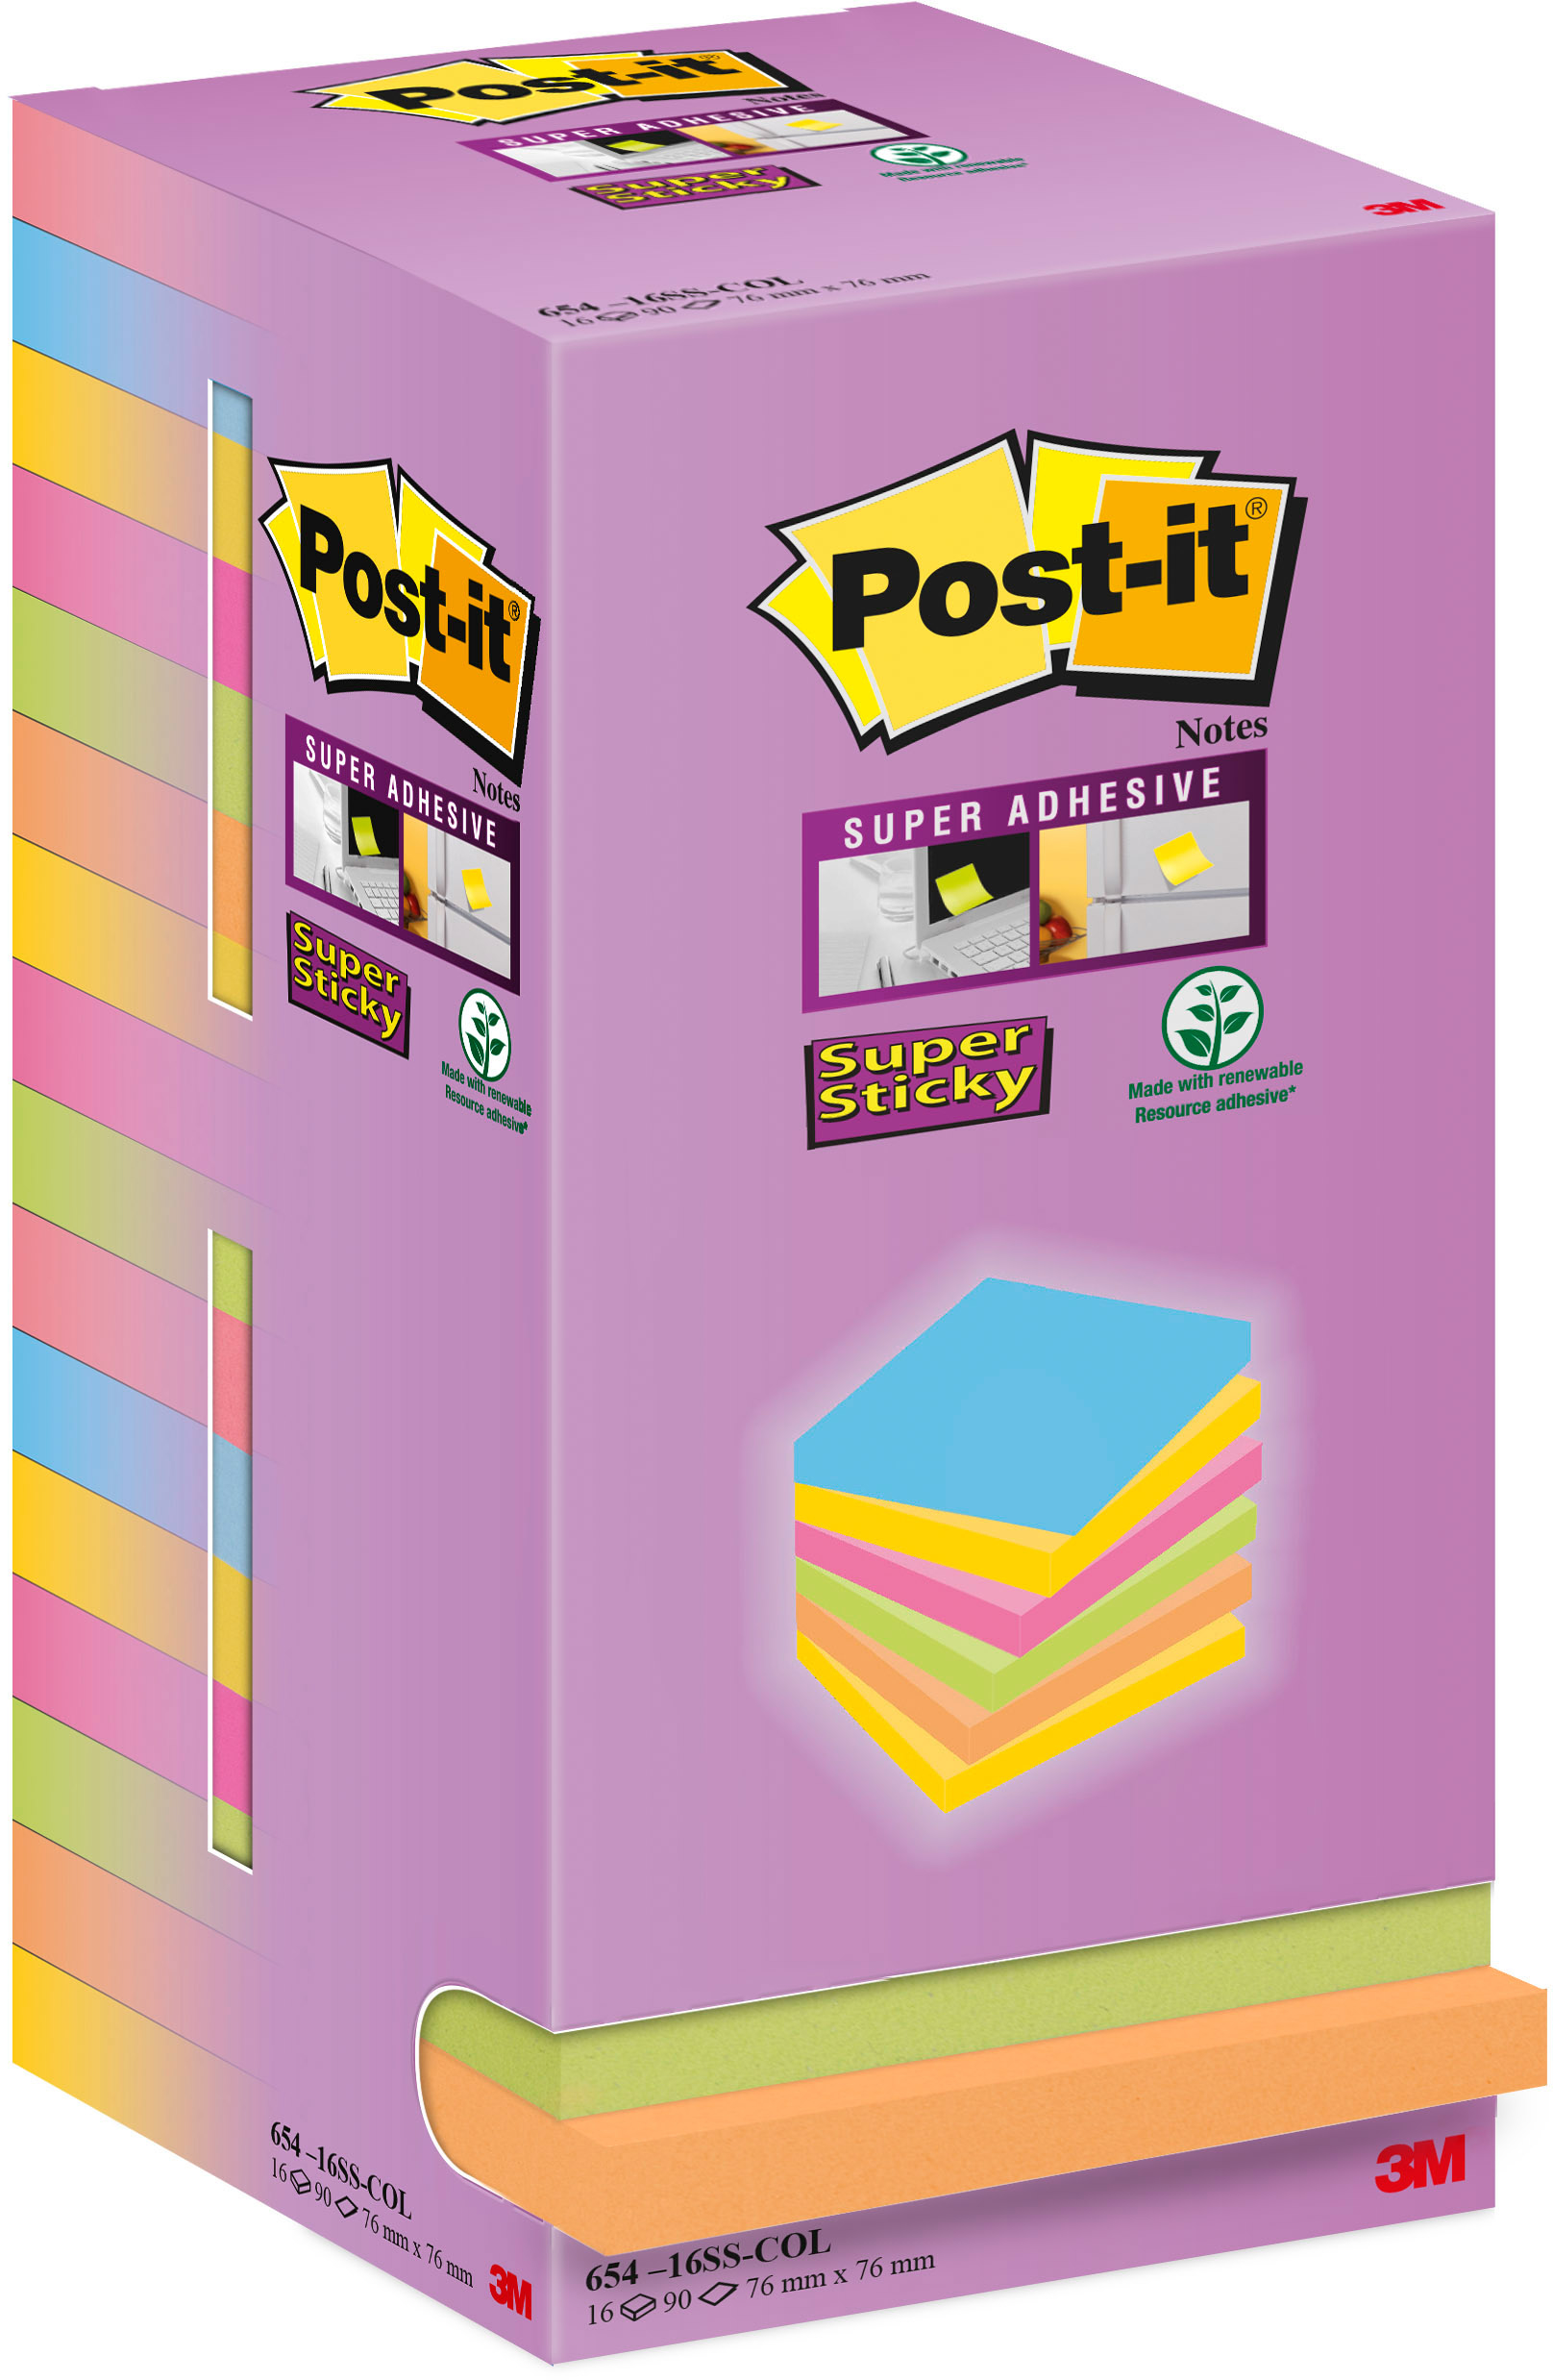 POST-IT Super Sticky Tower 76x76mm 654-16SS-COL coloré 16x90 feuilles